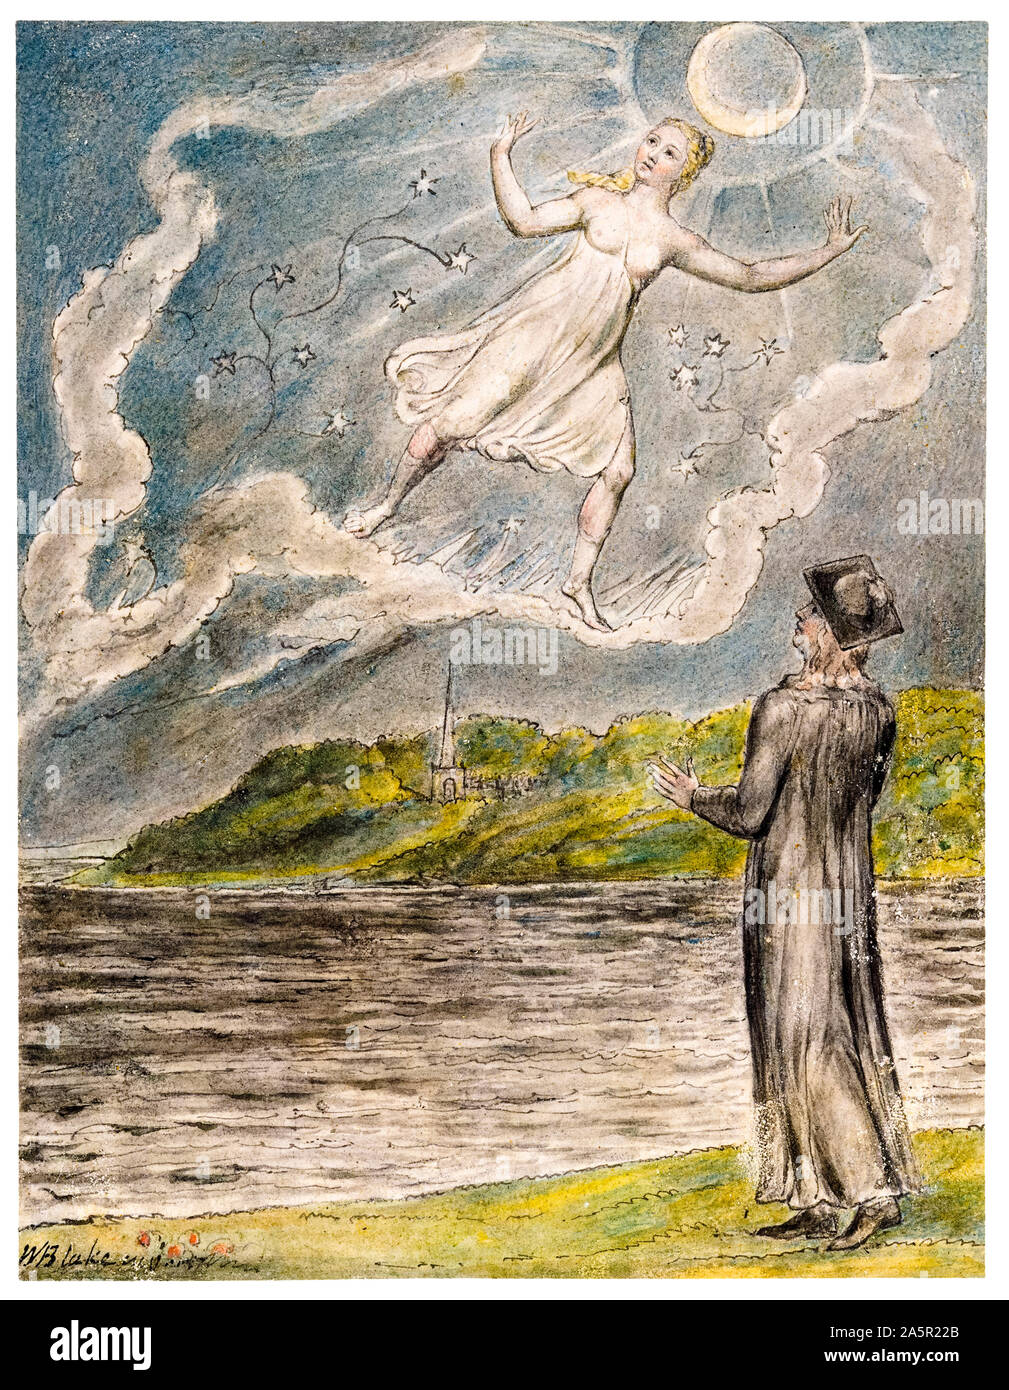 William Blake, The Wandering Moon, aquarelle sur stylo et encre, illustration, 1816-1820 Banque D'Images